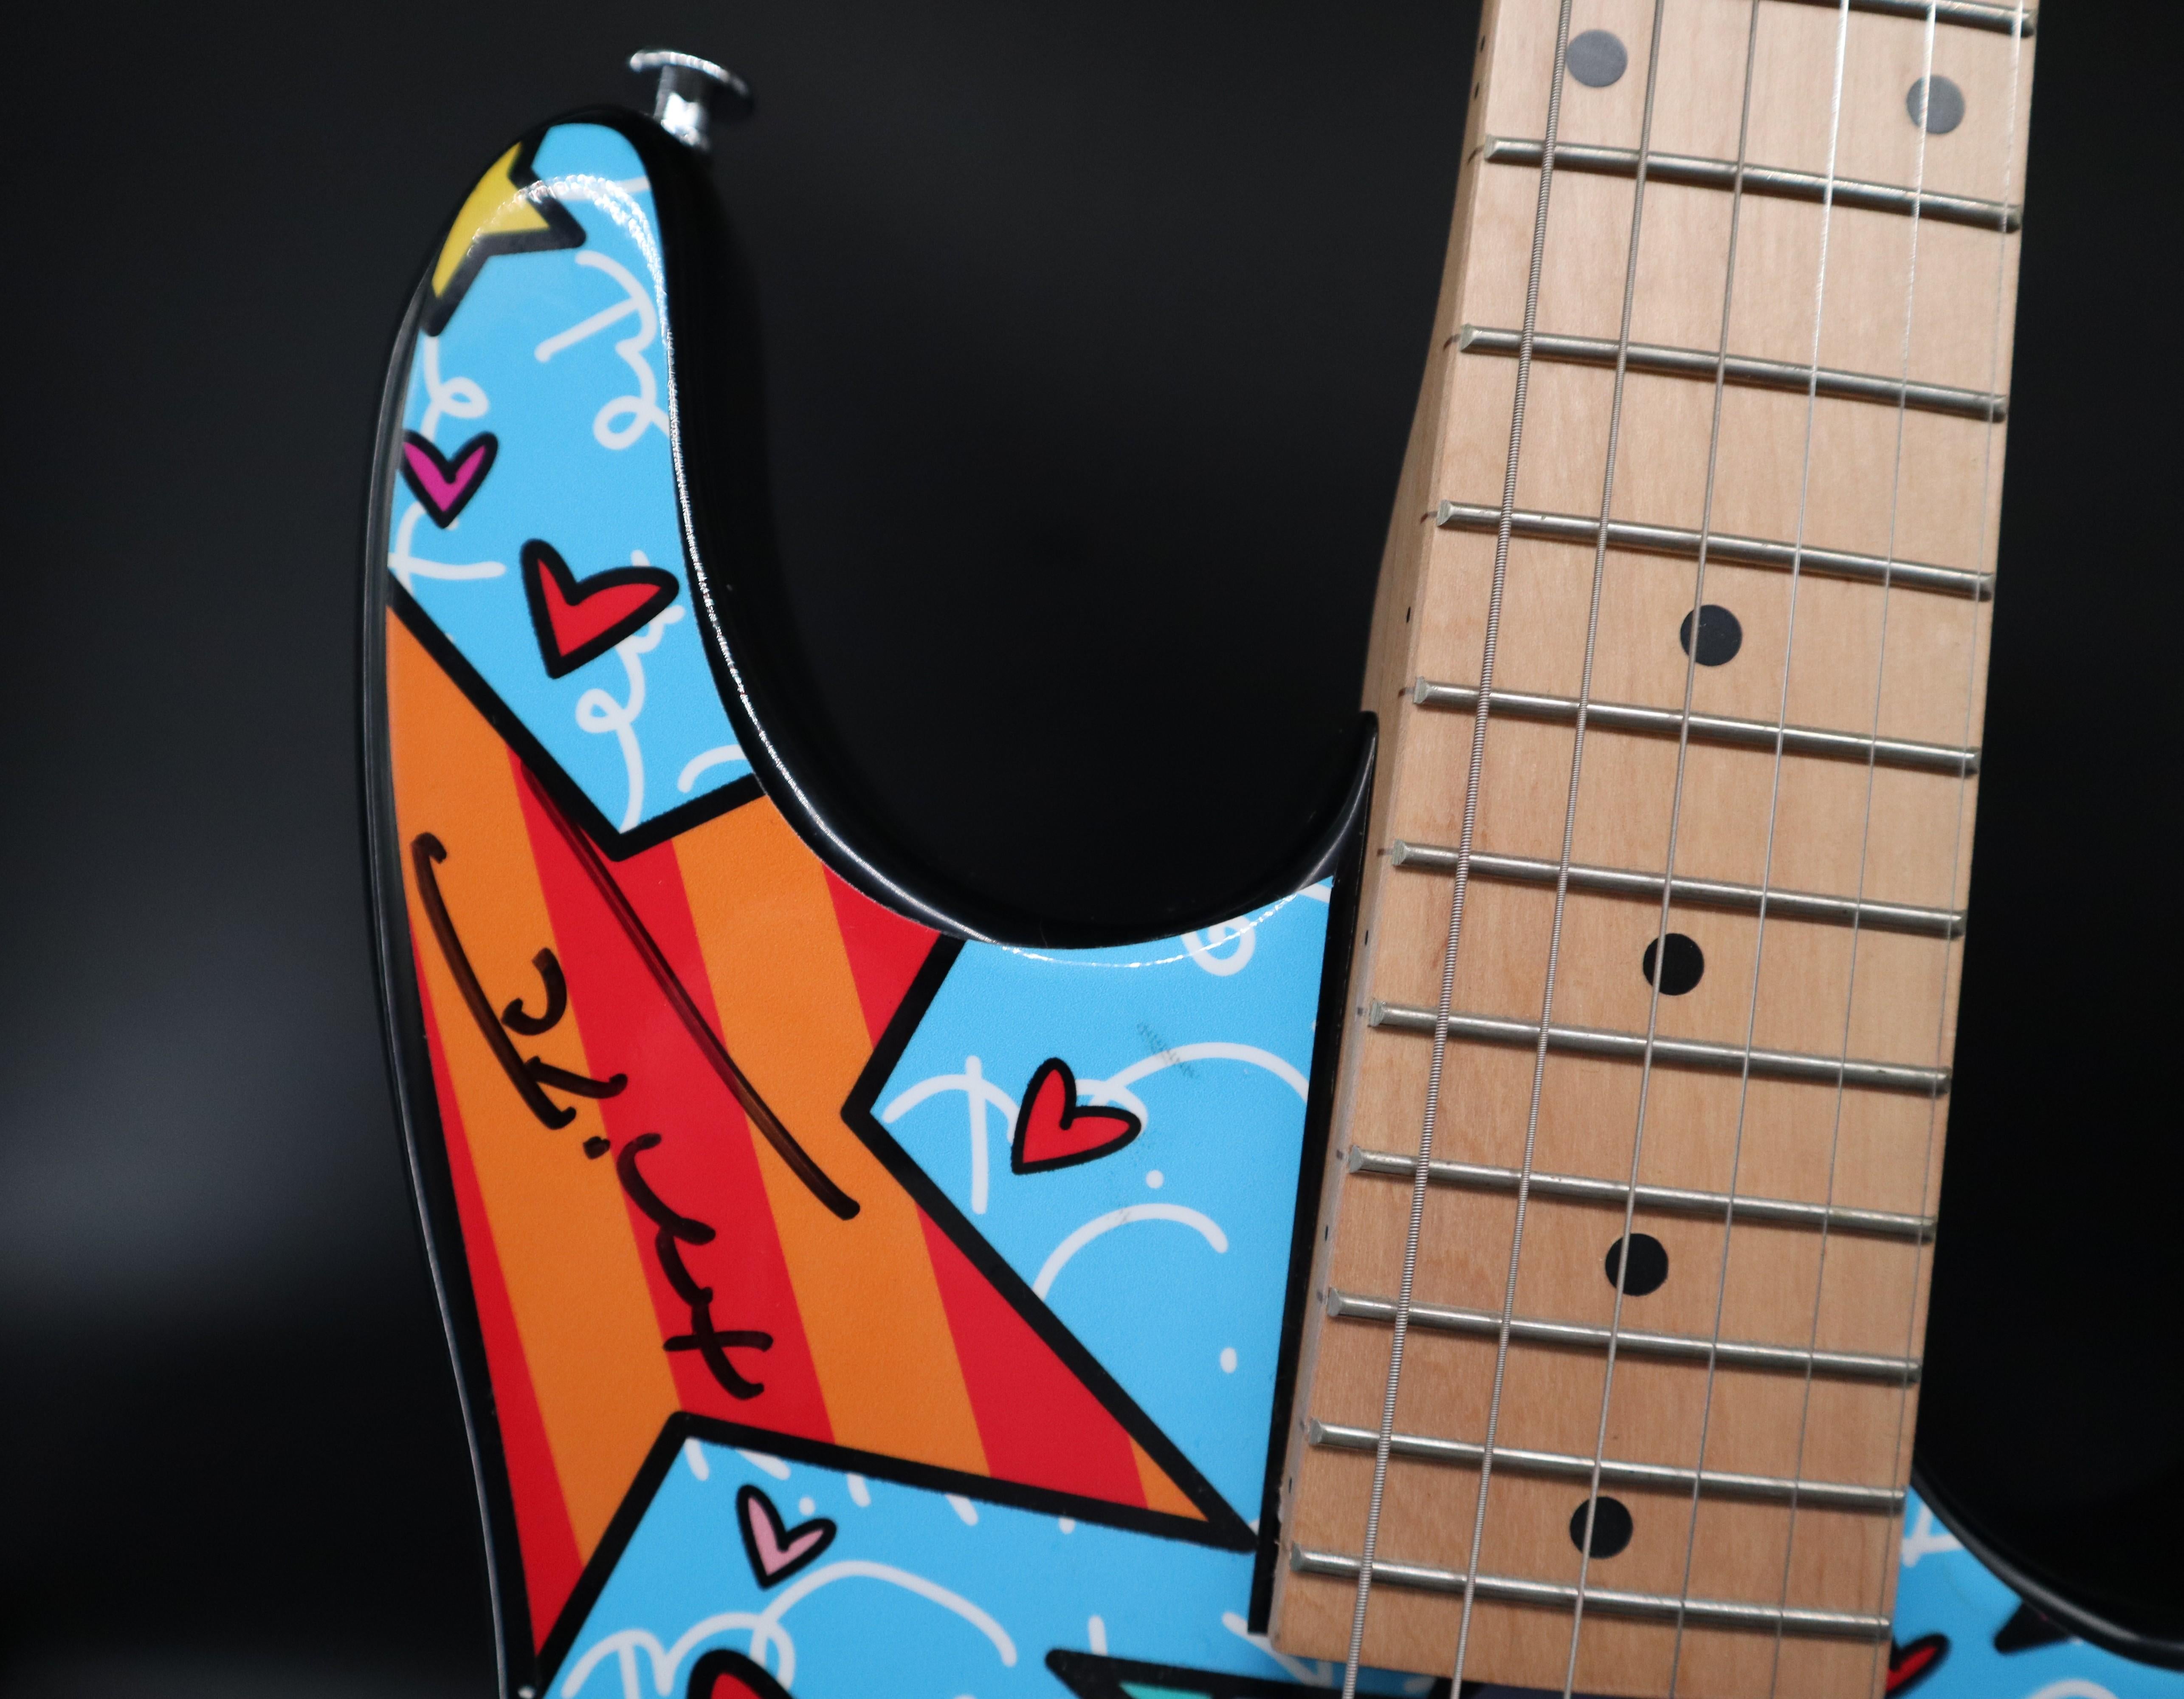 Artist: Romero Britto
Manufacturer: JB Guitars
Model: Viper
Guitar Total Length: 39